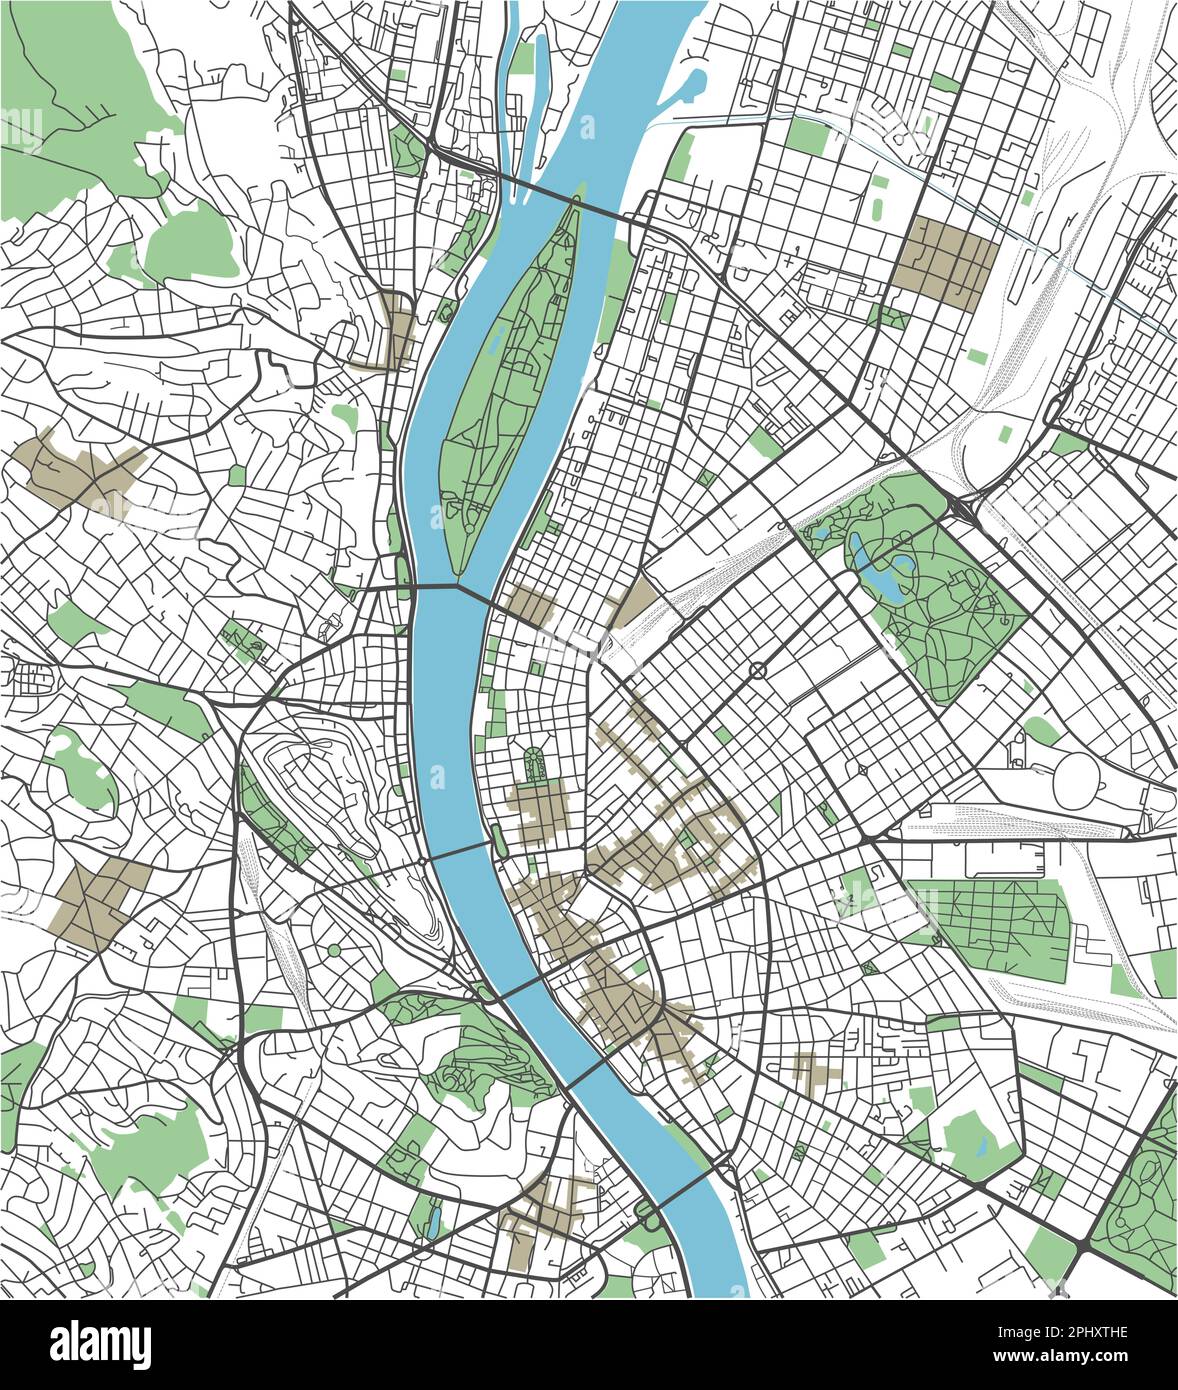 Farbenfroher Stadtplan von Budapest Stock Vektor